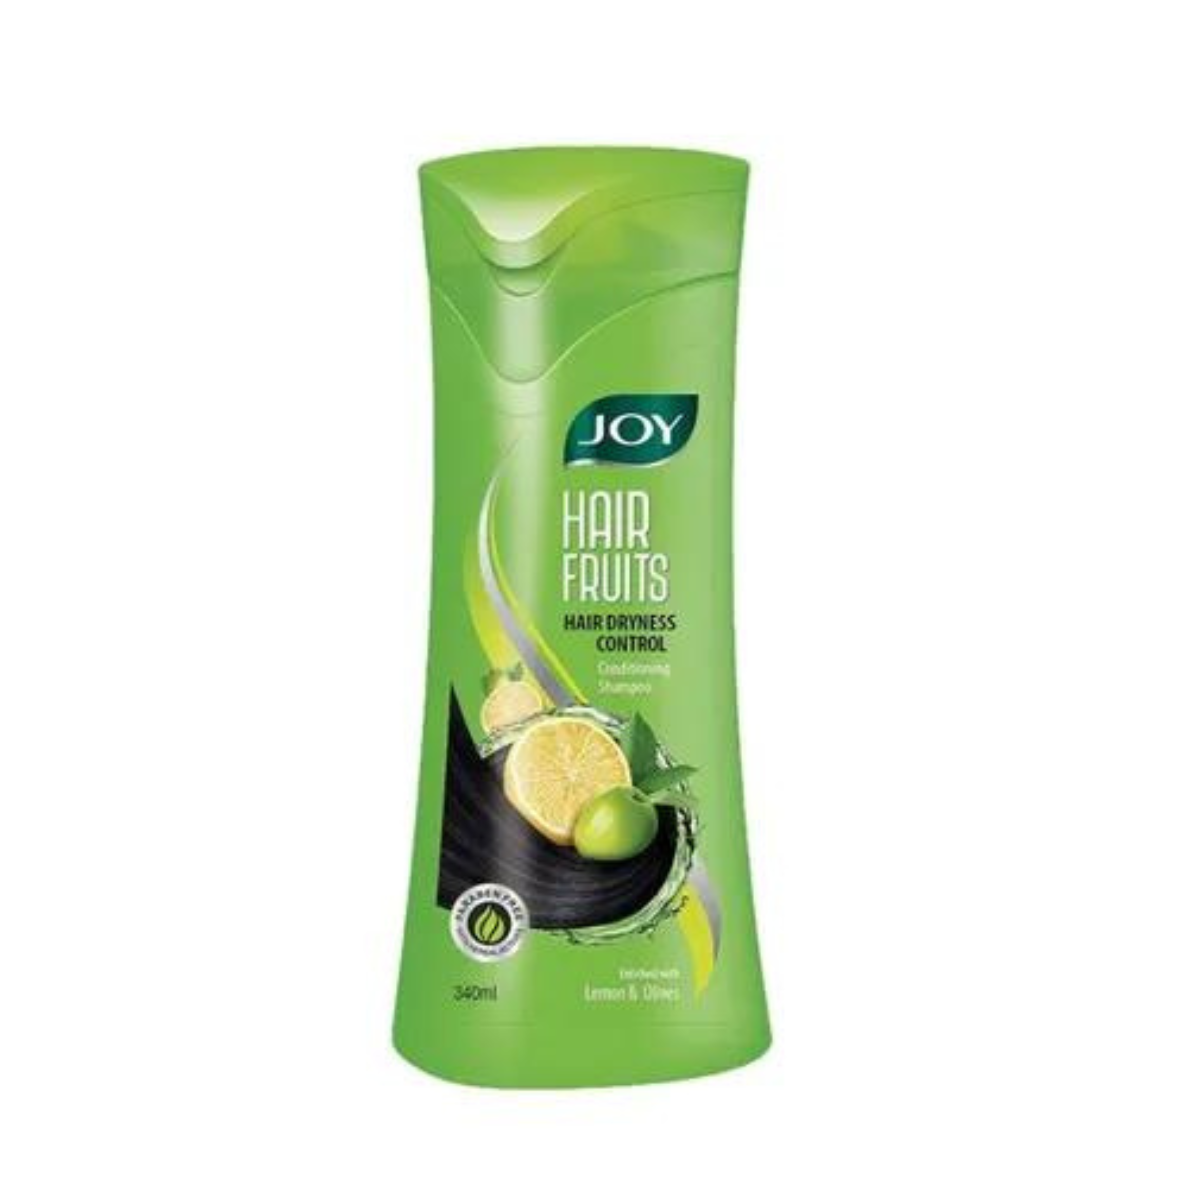 Joy Hair Fruits - Hair Dryness Control Conditioning Shampoo - Lemon Fruit And Olives - 340ml